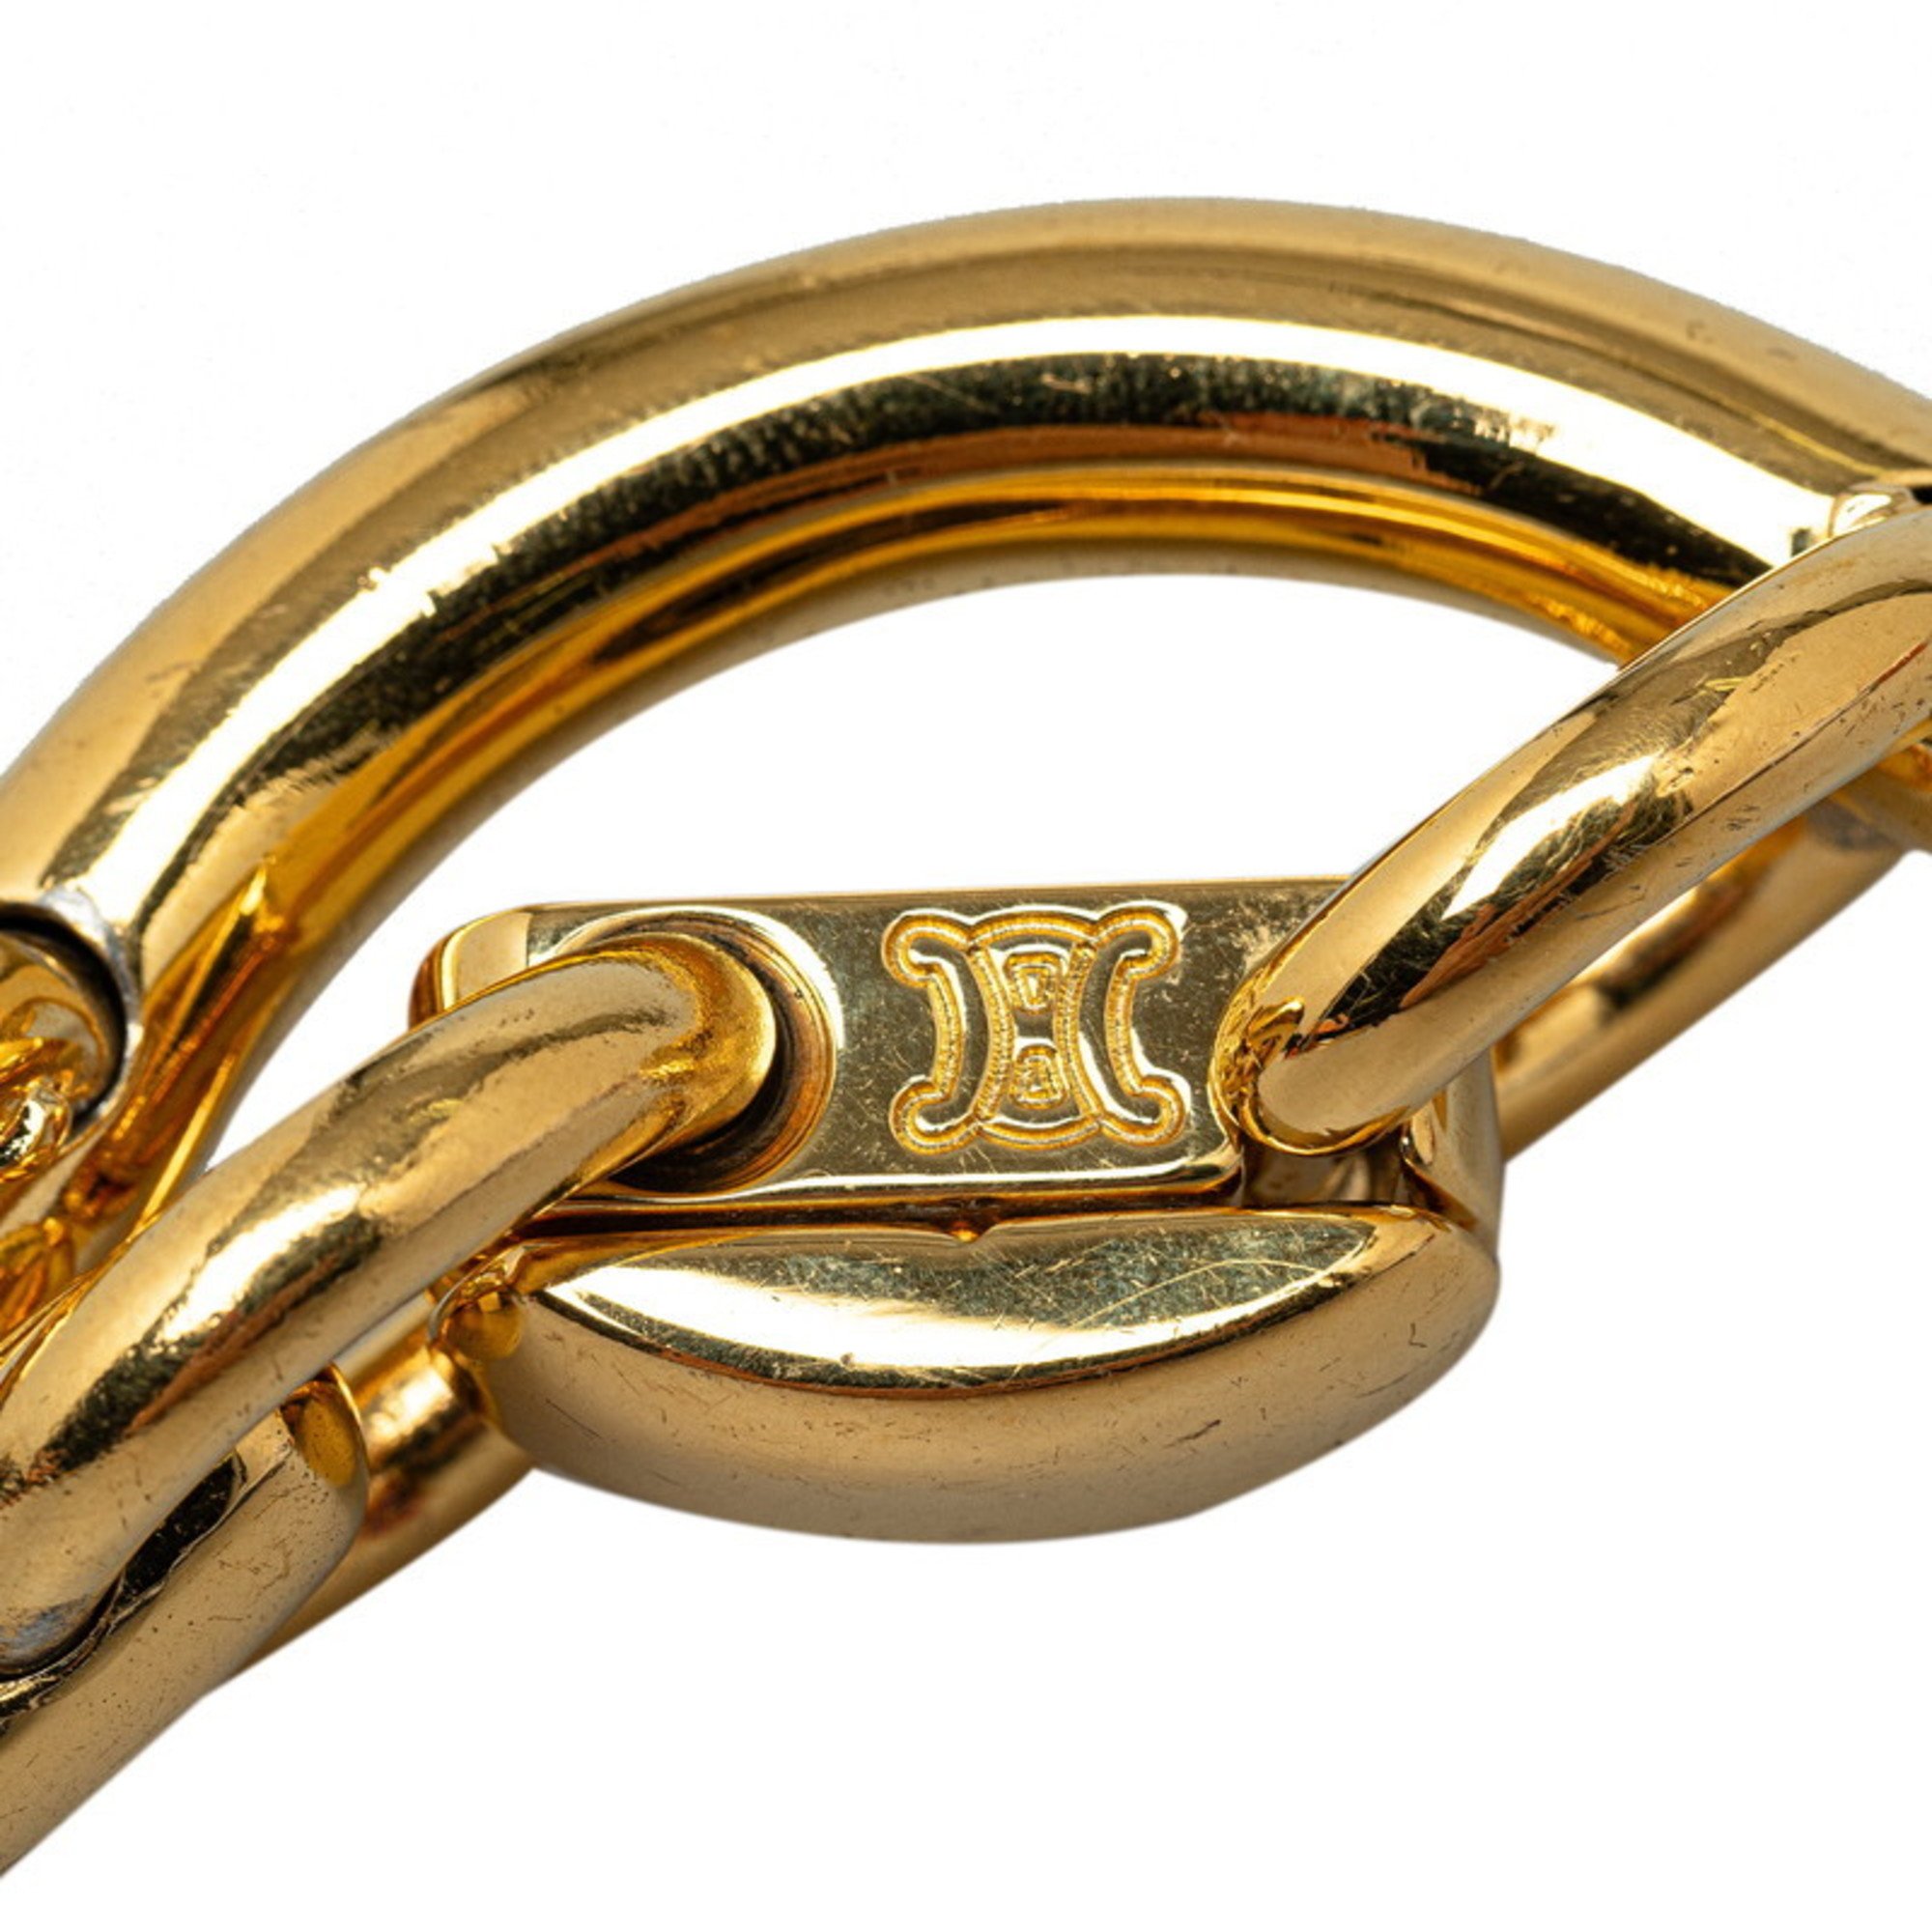 CELINE Bracelet Bangle Gold Plated Women's